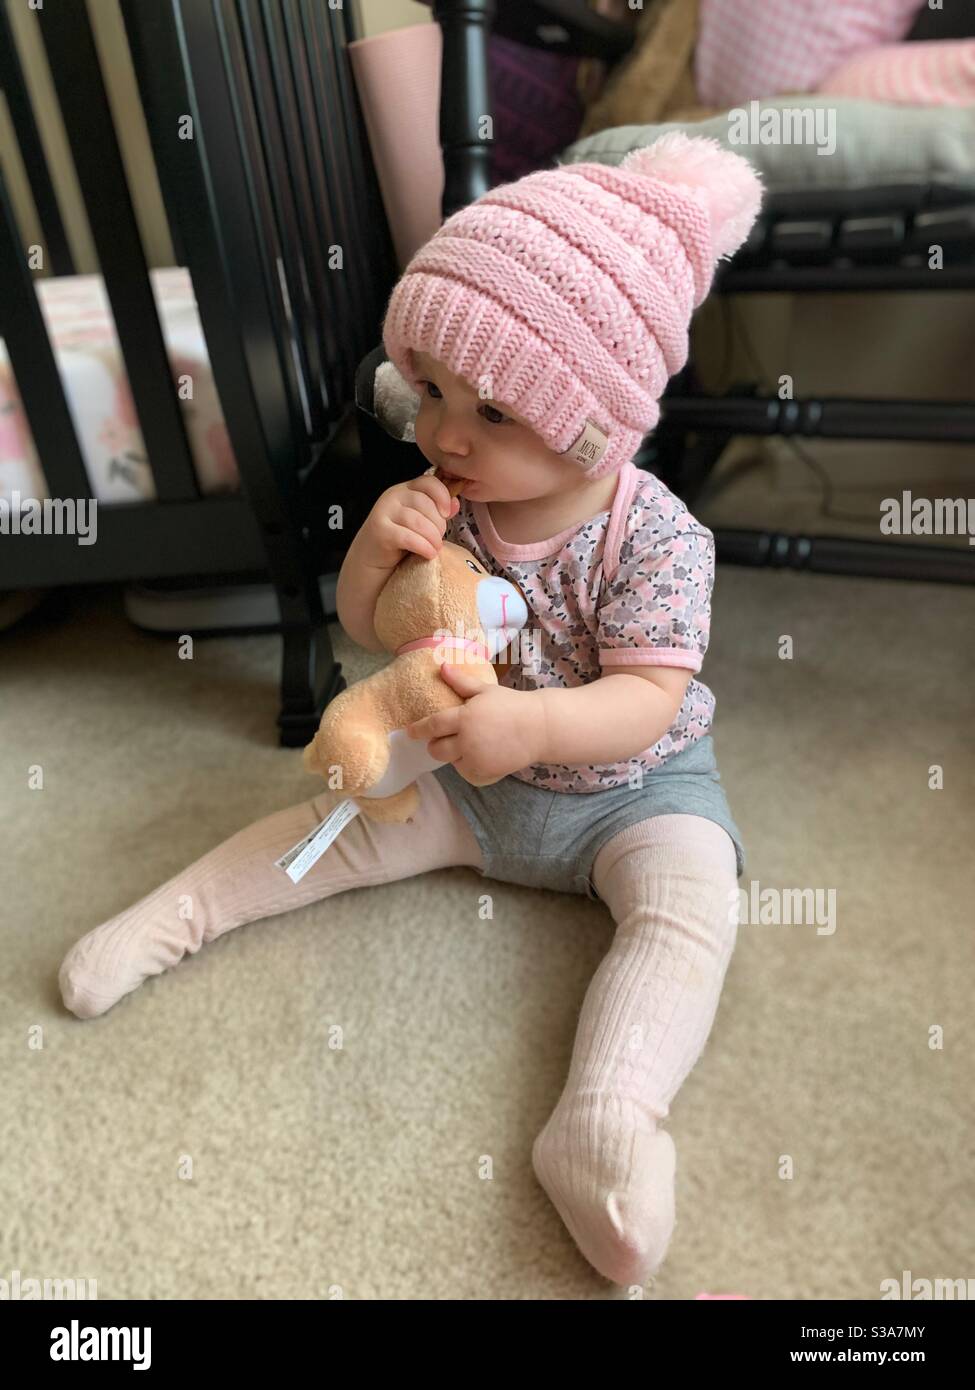 Baby in winter hat chews stuffed animal. Stock Photo